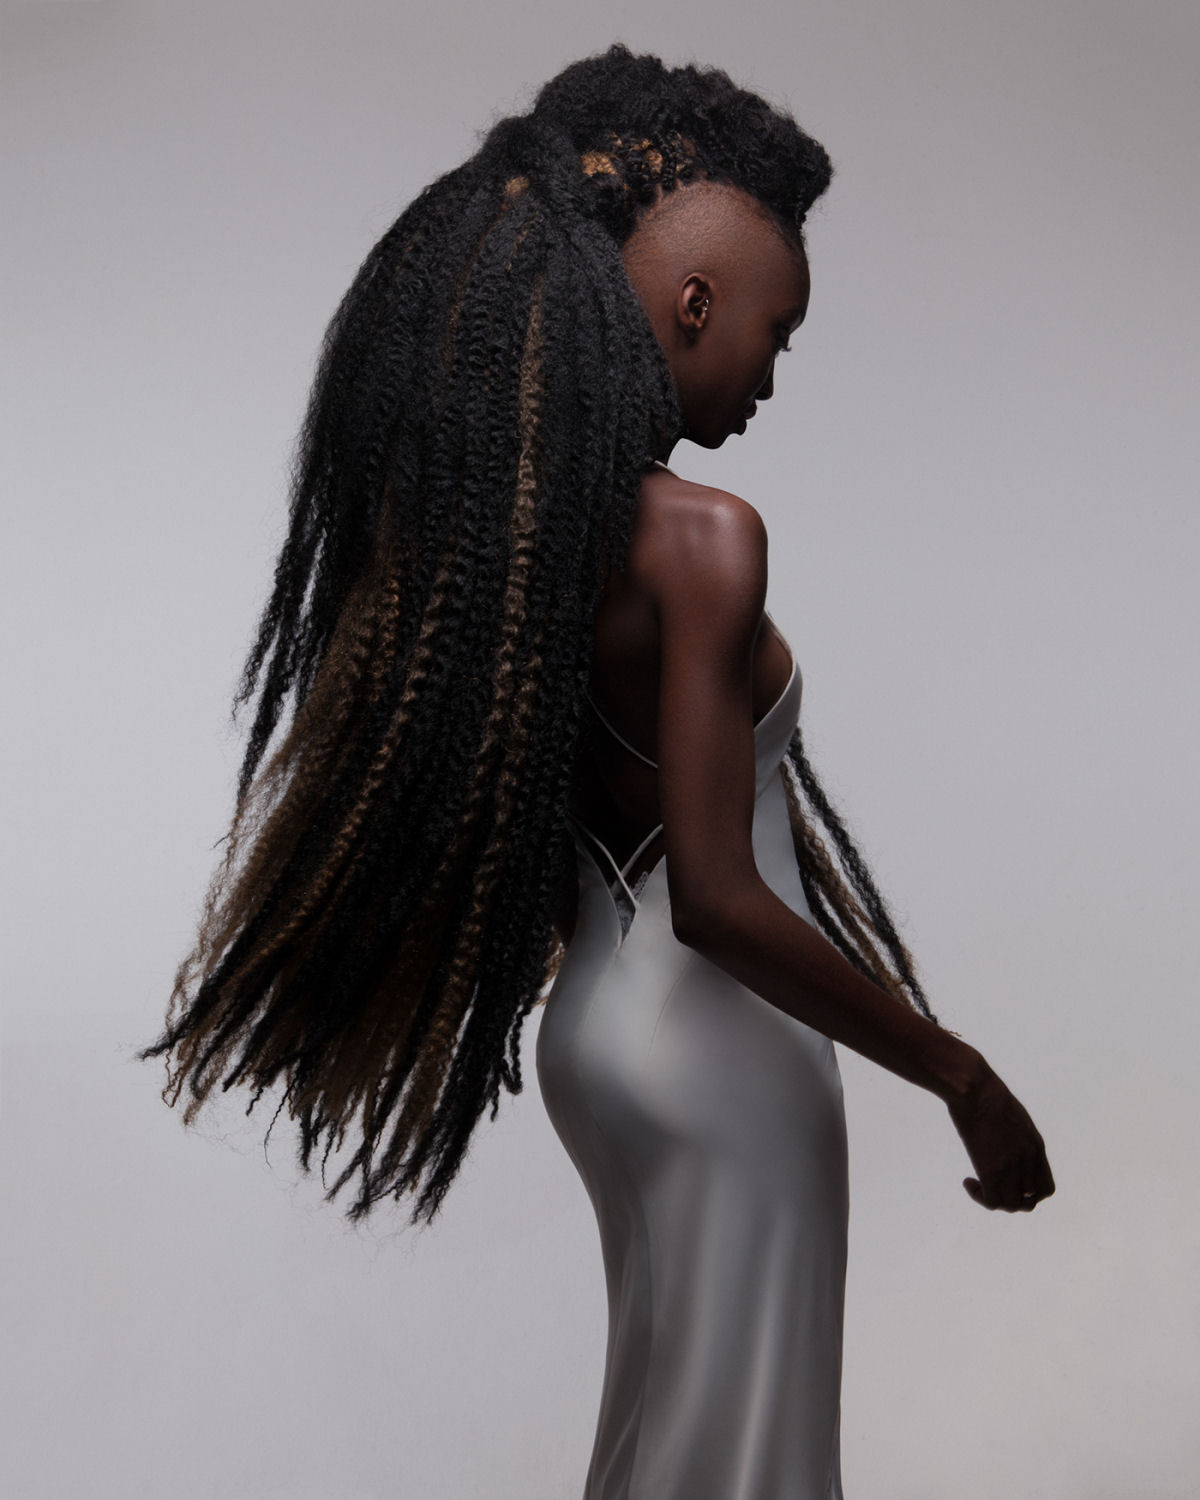 A beleza futurista desta série de penteados afros é um luxo só 09